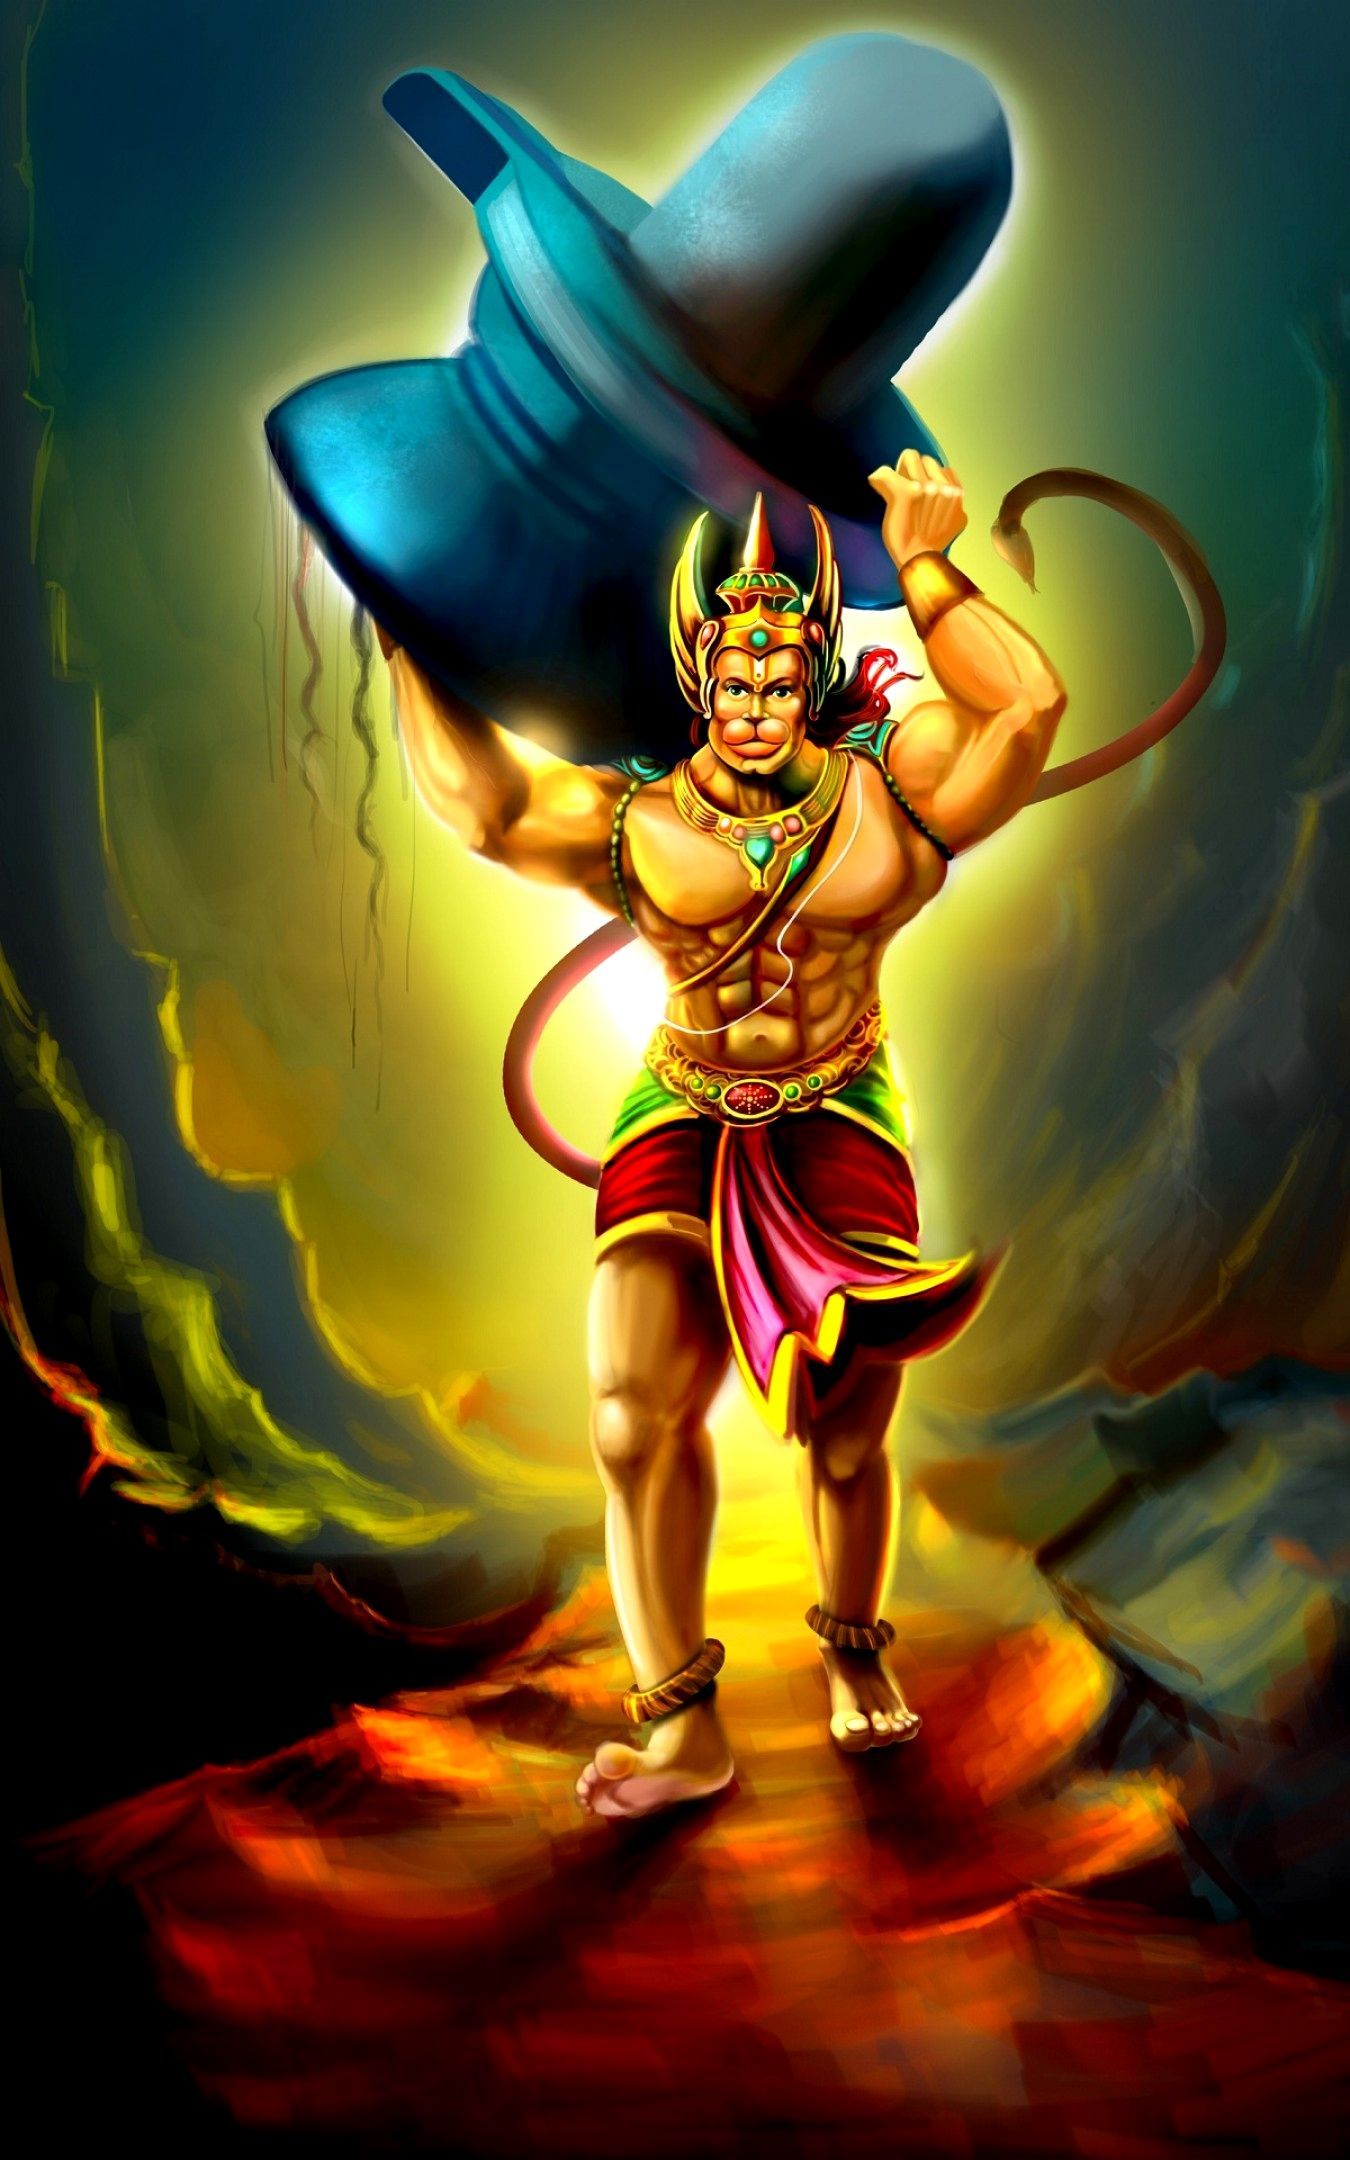 4K Wallpaper For Mobile Lord Shiva Trick. Lord hanuman